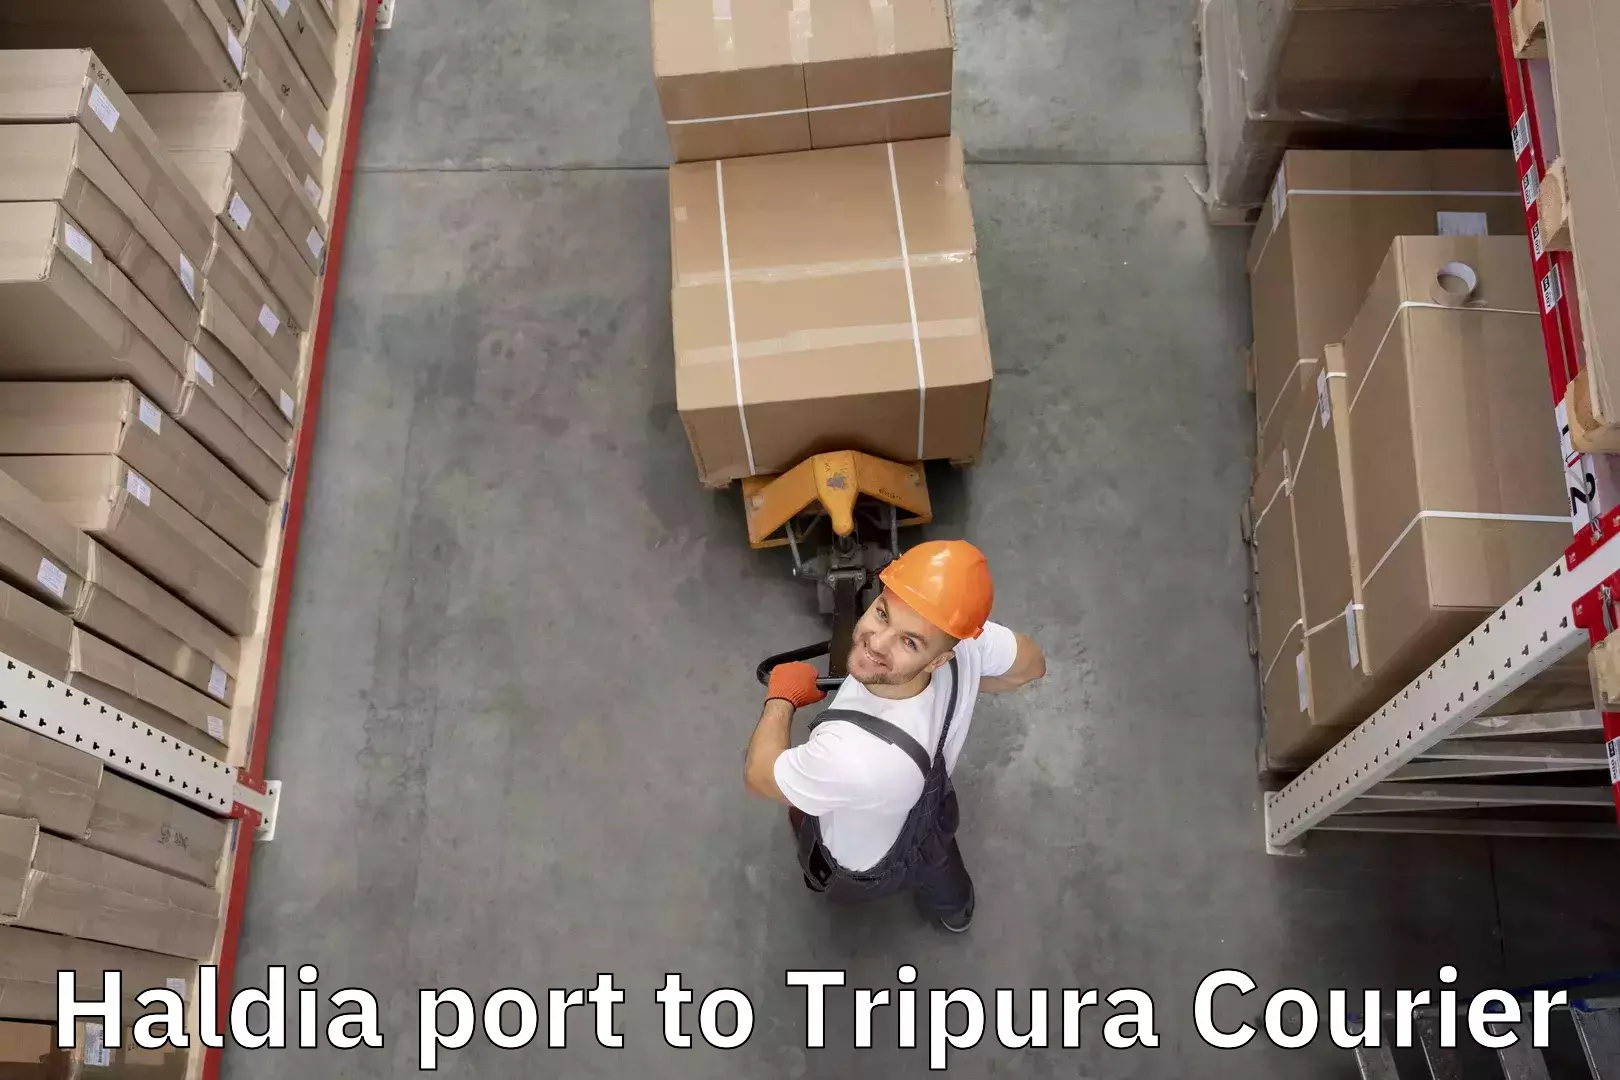 Nationwide luggage courier Haldia port to Agartala